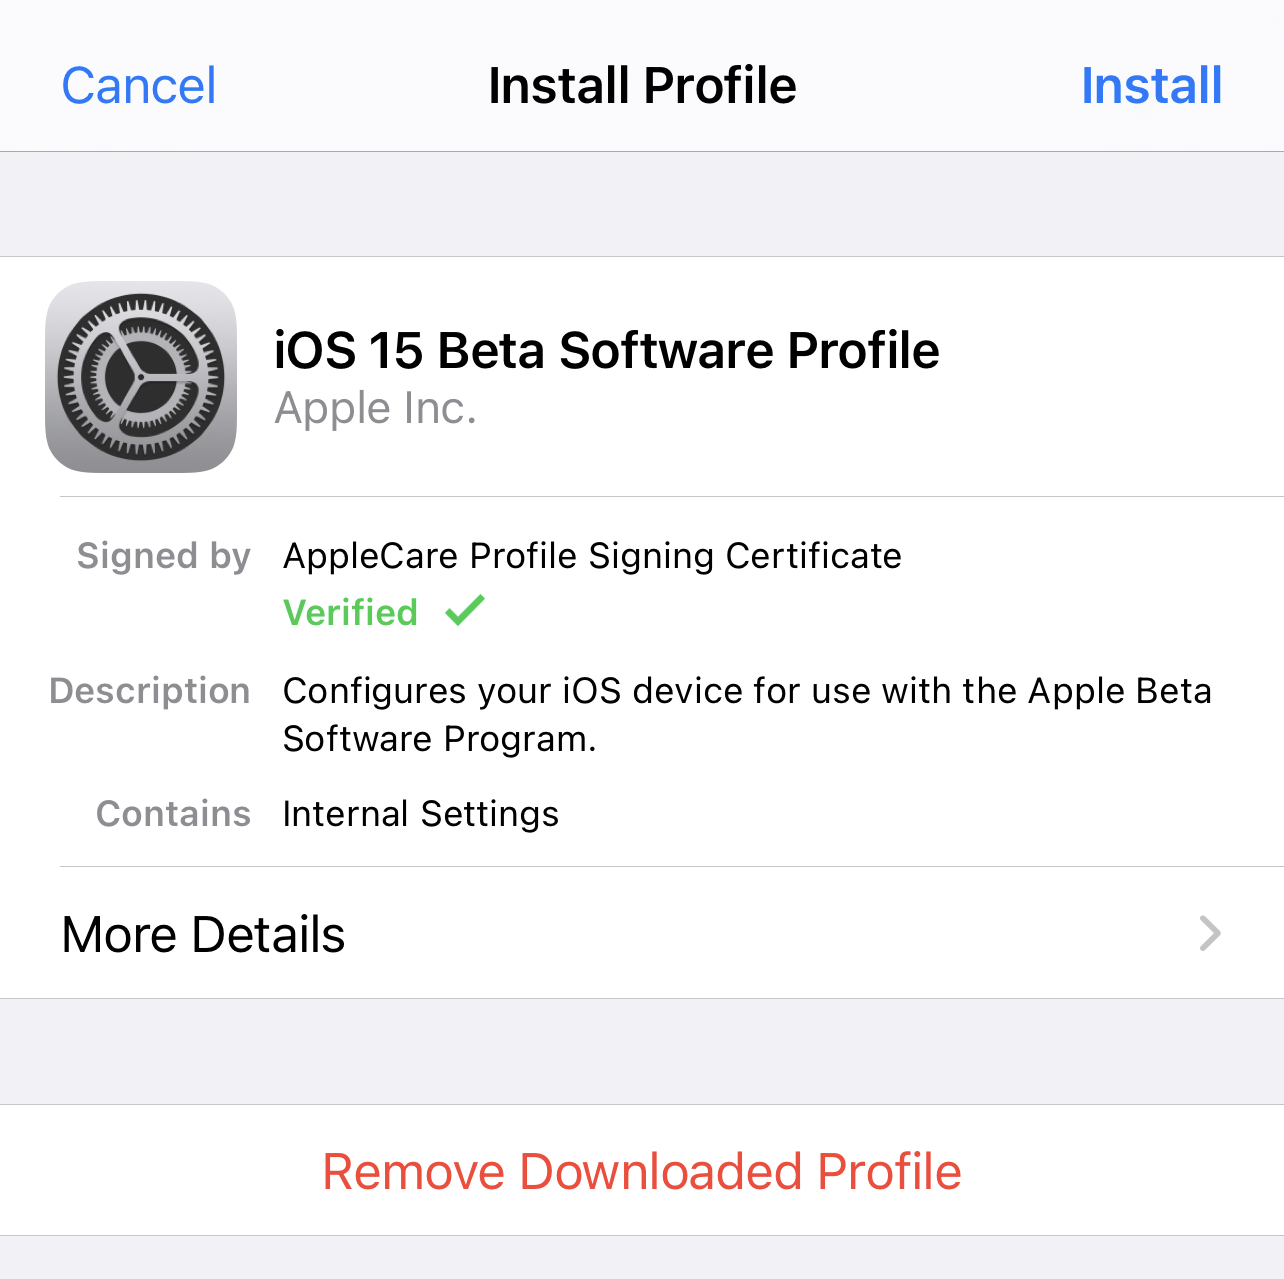 ios 16 beta profile